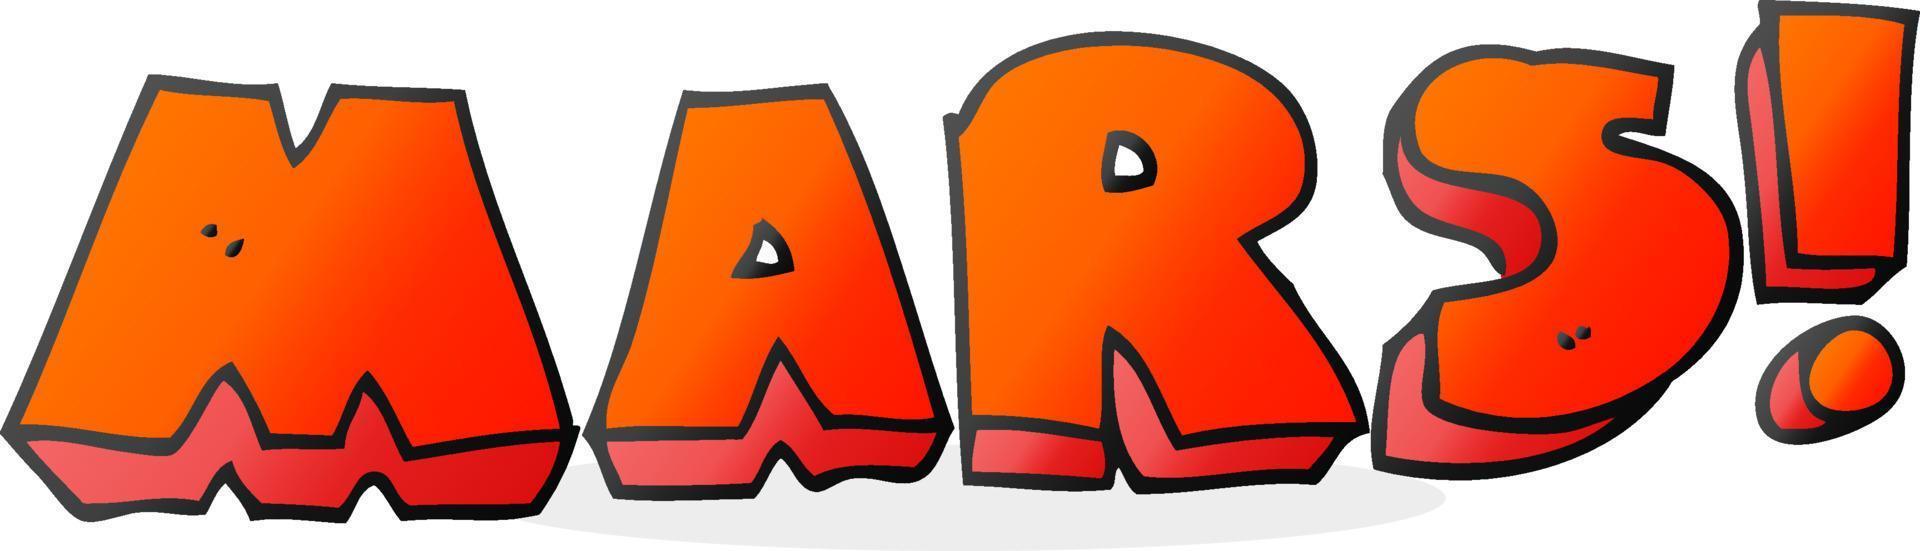 cartoon Mars text symbol vector